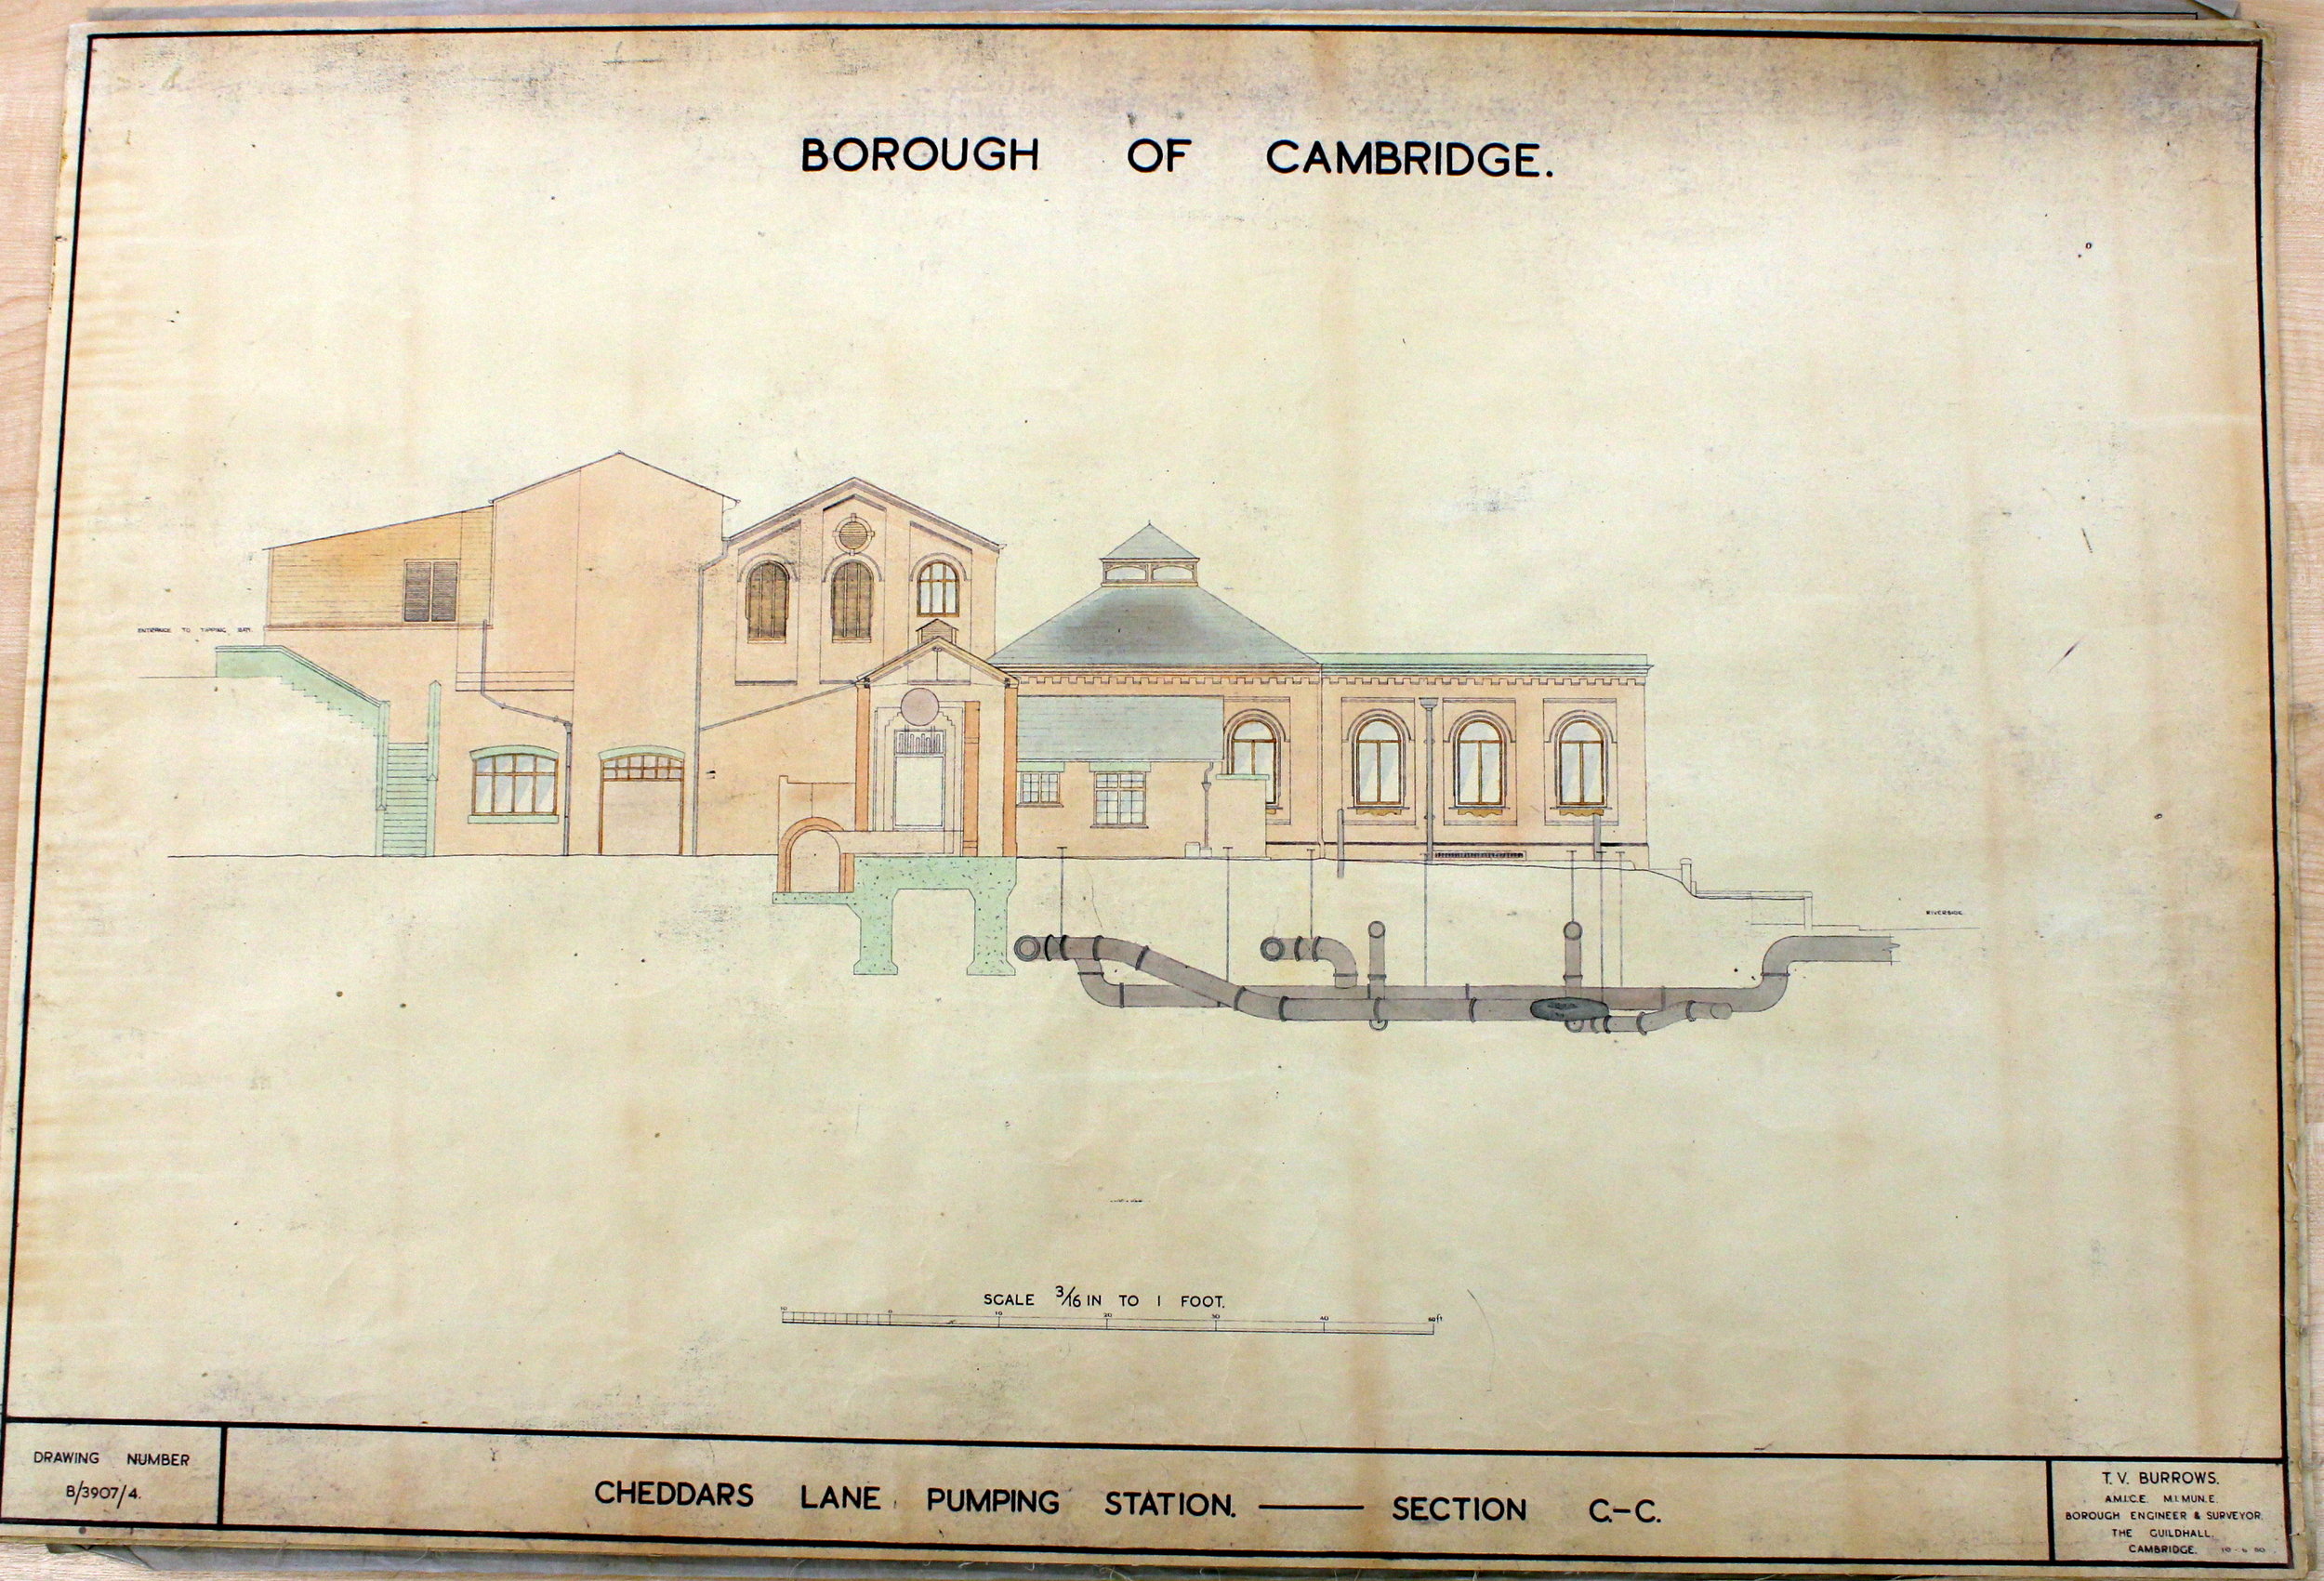 Borough_of_Cambridge_pumping_station_underground_section_architects_plan.JPG